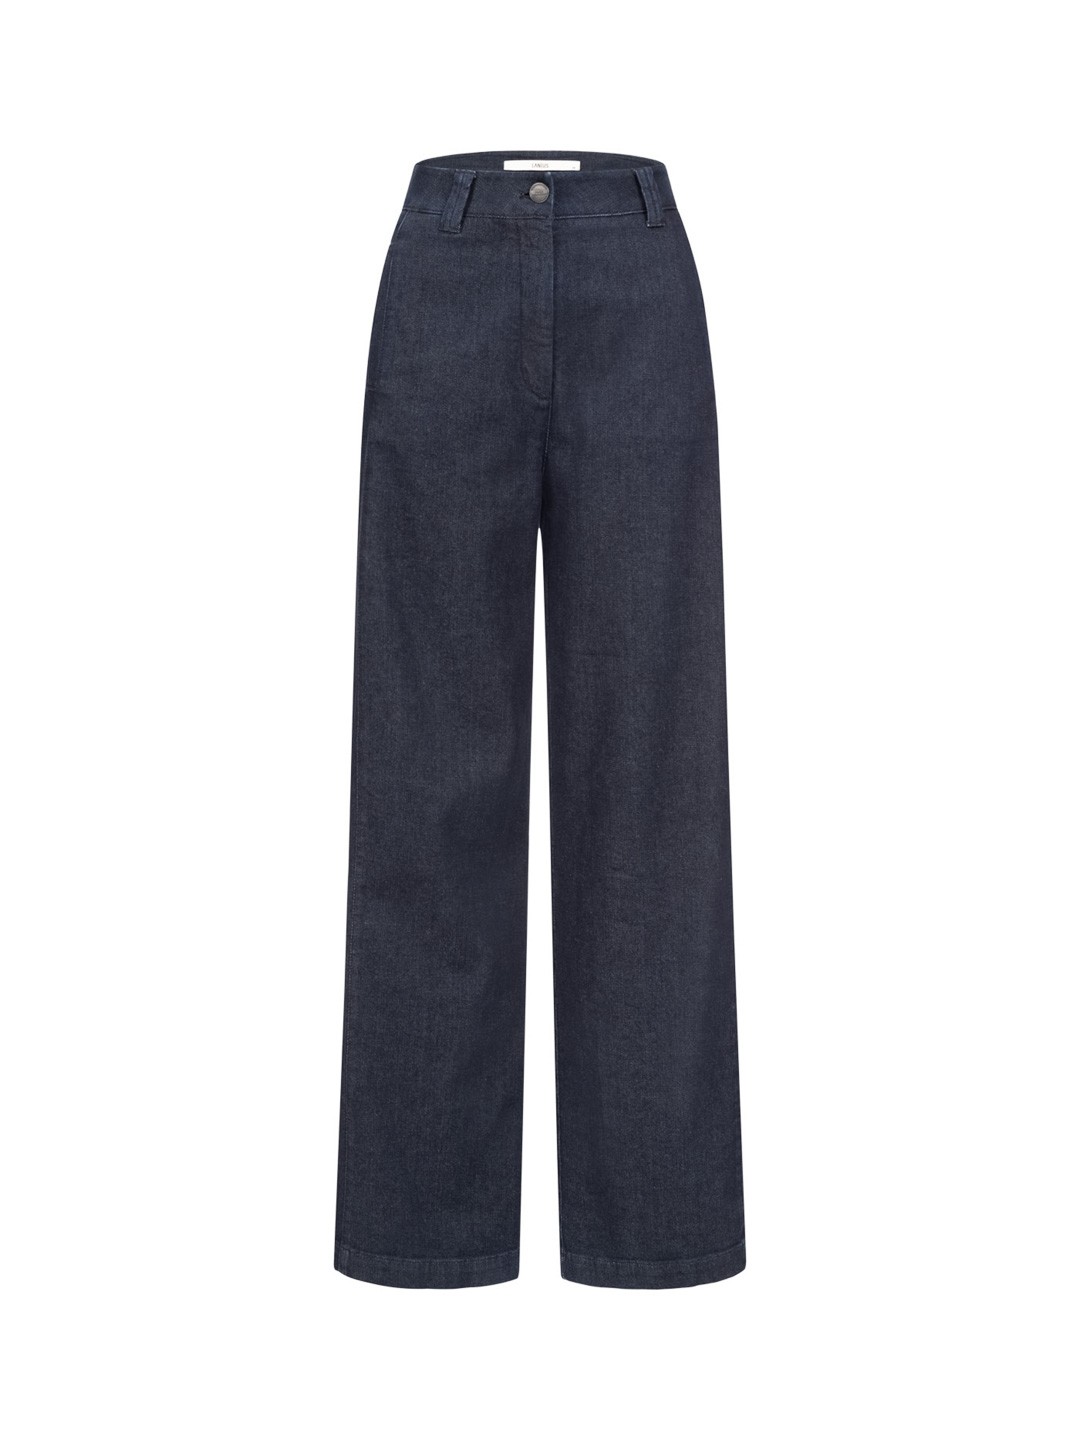 High-waisted Marlene jeans made from organic cotton - dark blue denim